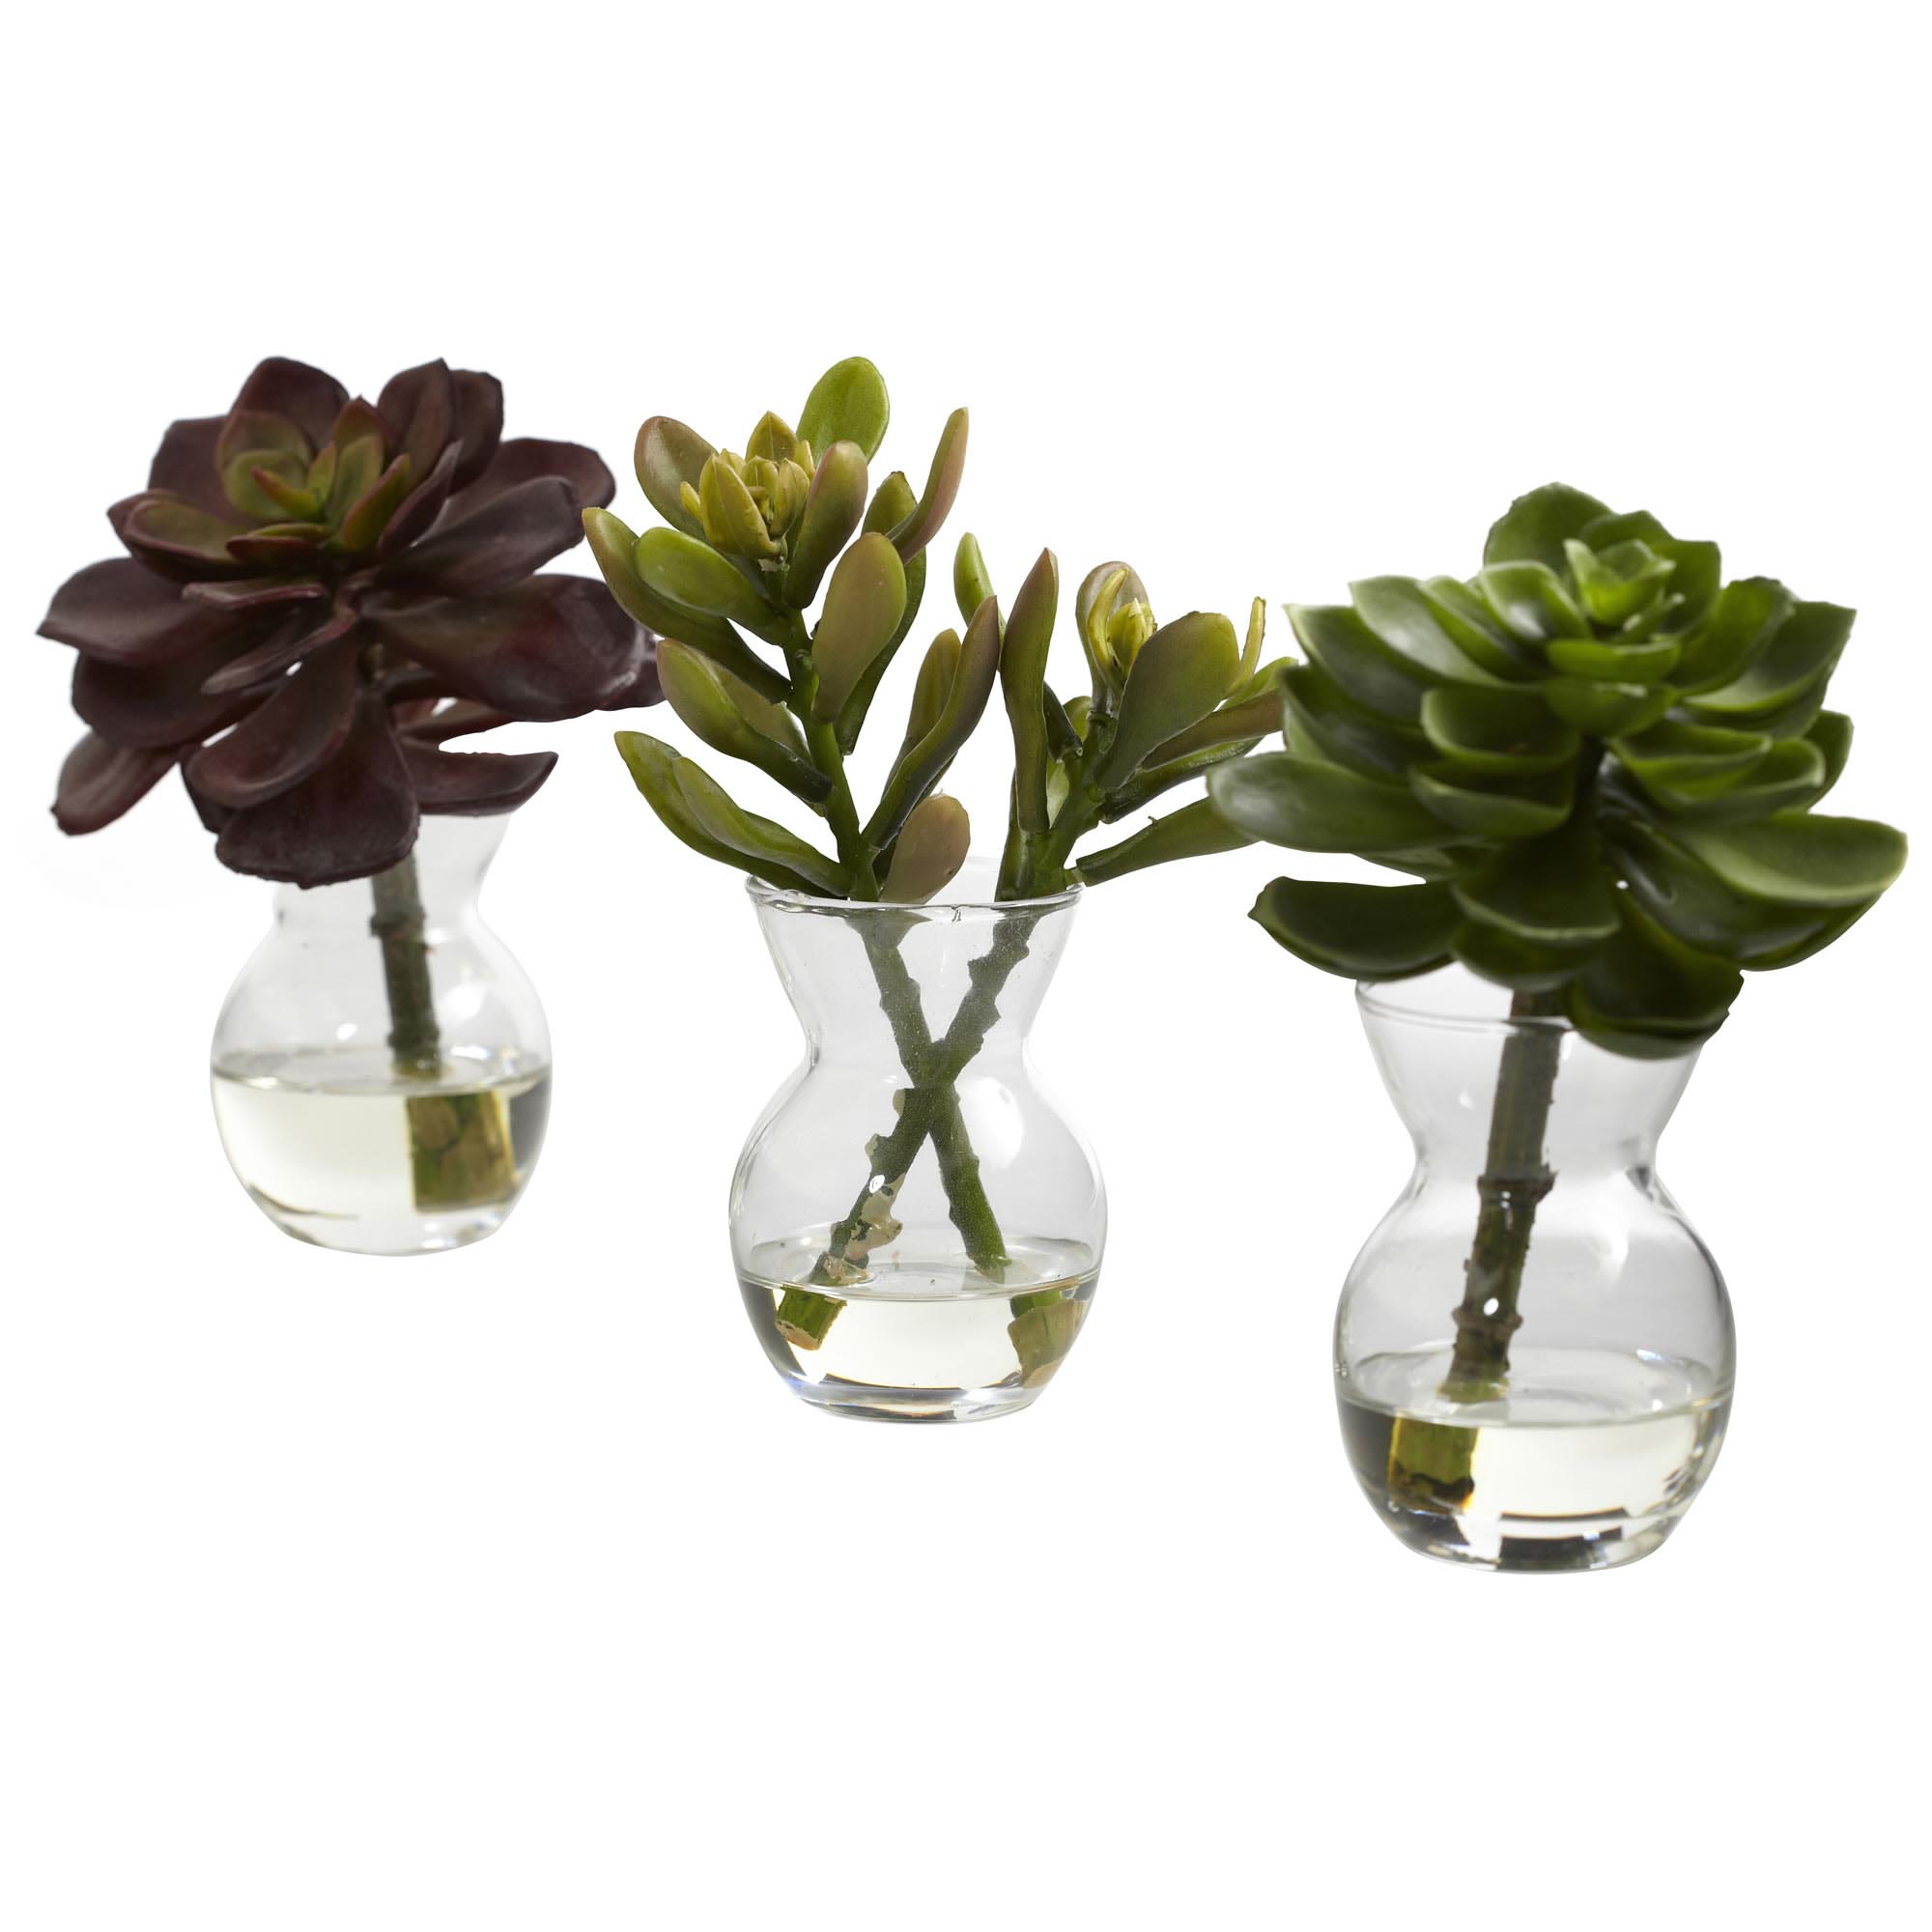 Artificial Succulent Arrangements In Glass Vase(set Of 3)